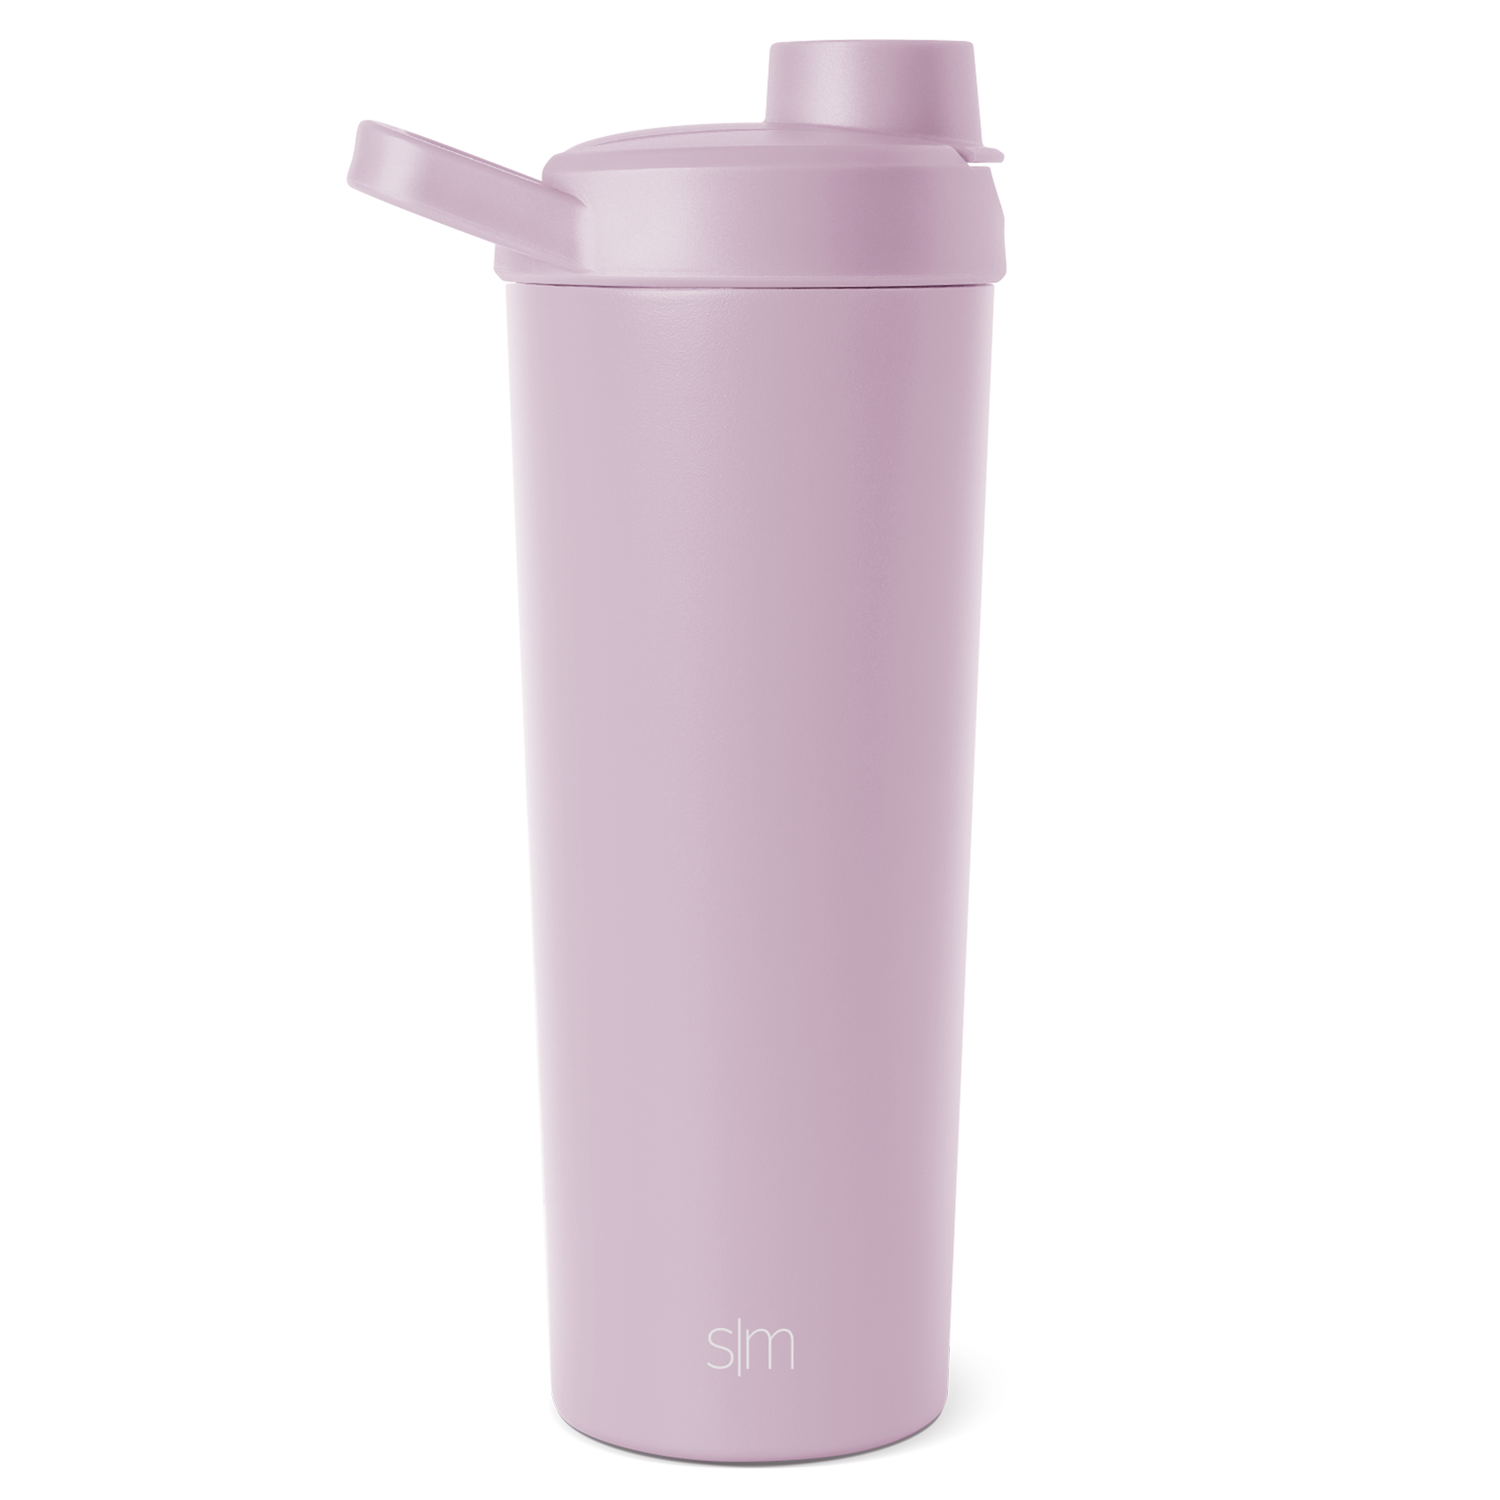 Slovic Shakers for Protein Shake, Plastic Free Gym Bottles